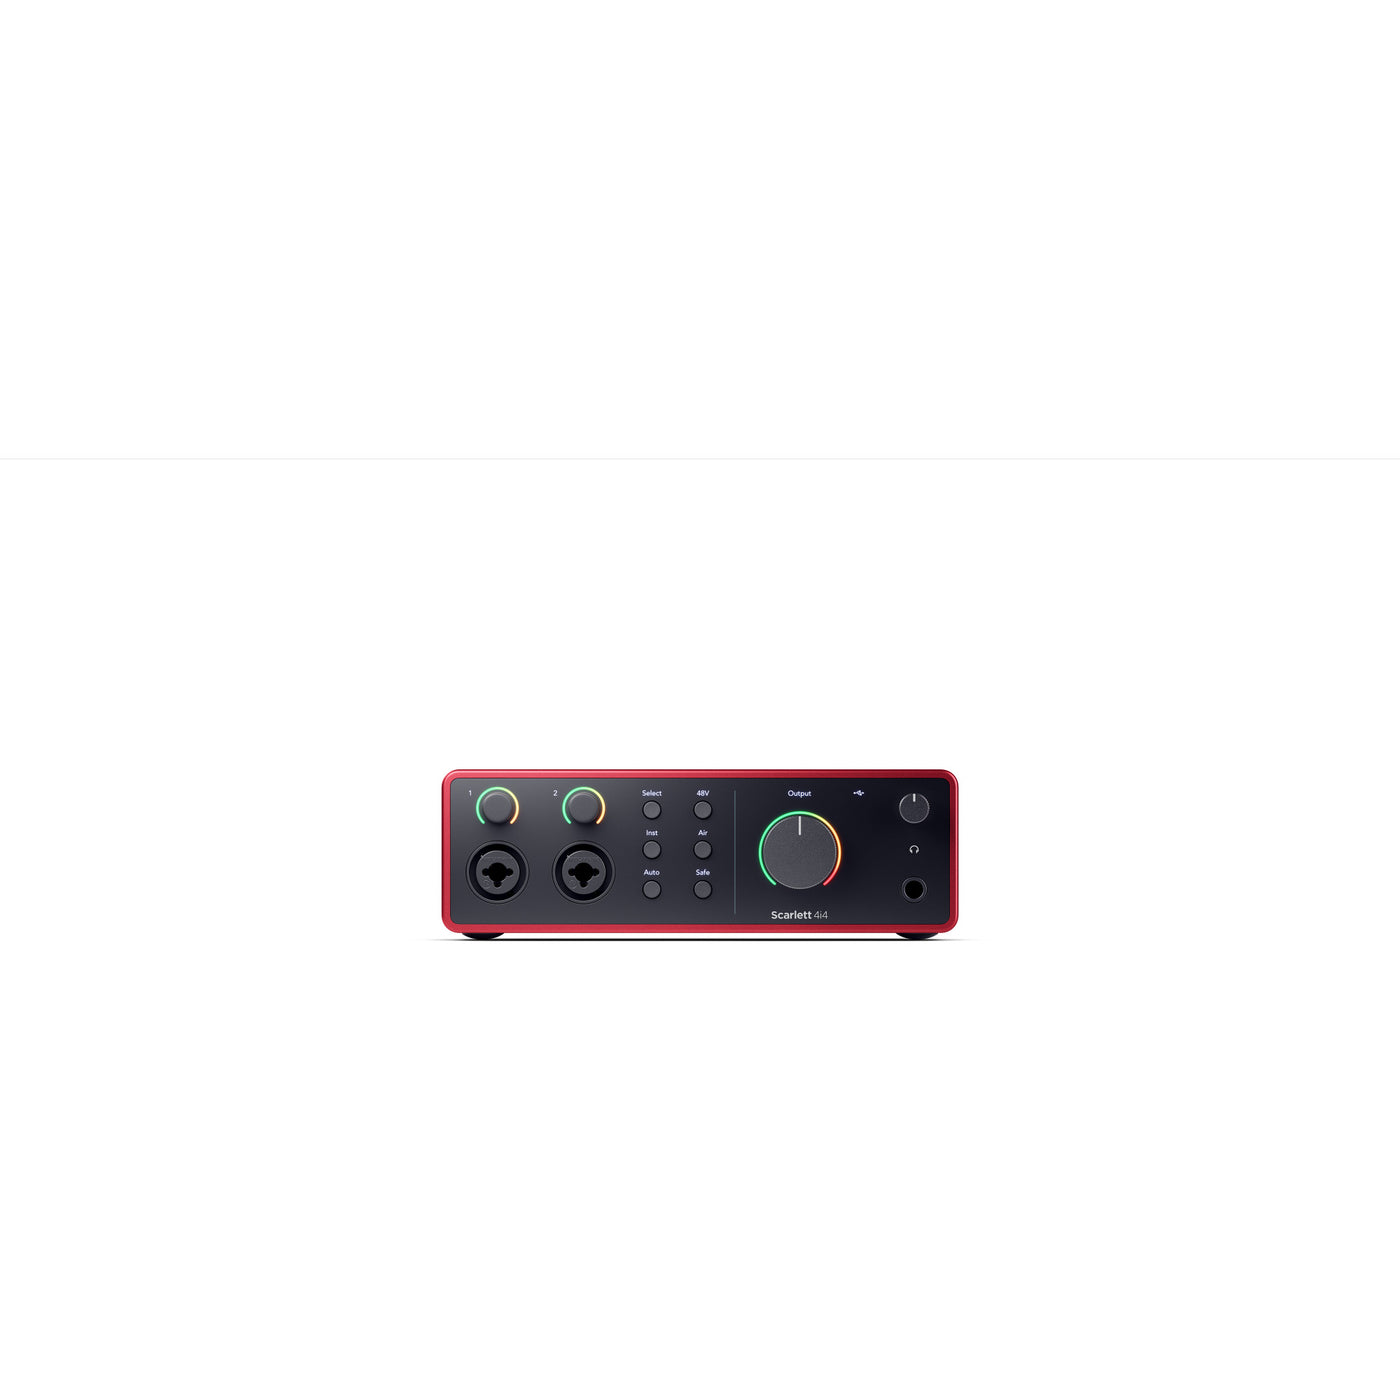 Focusrite Scarlett 4i4 (4th Gen) USB Audio Interface, Professional Quality Audio Equipment for Studio Musicians, Guitarists, & Producers